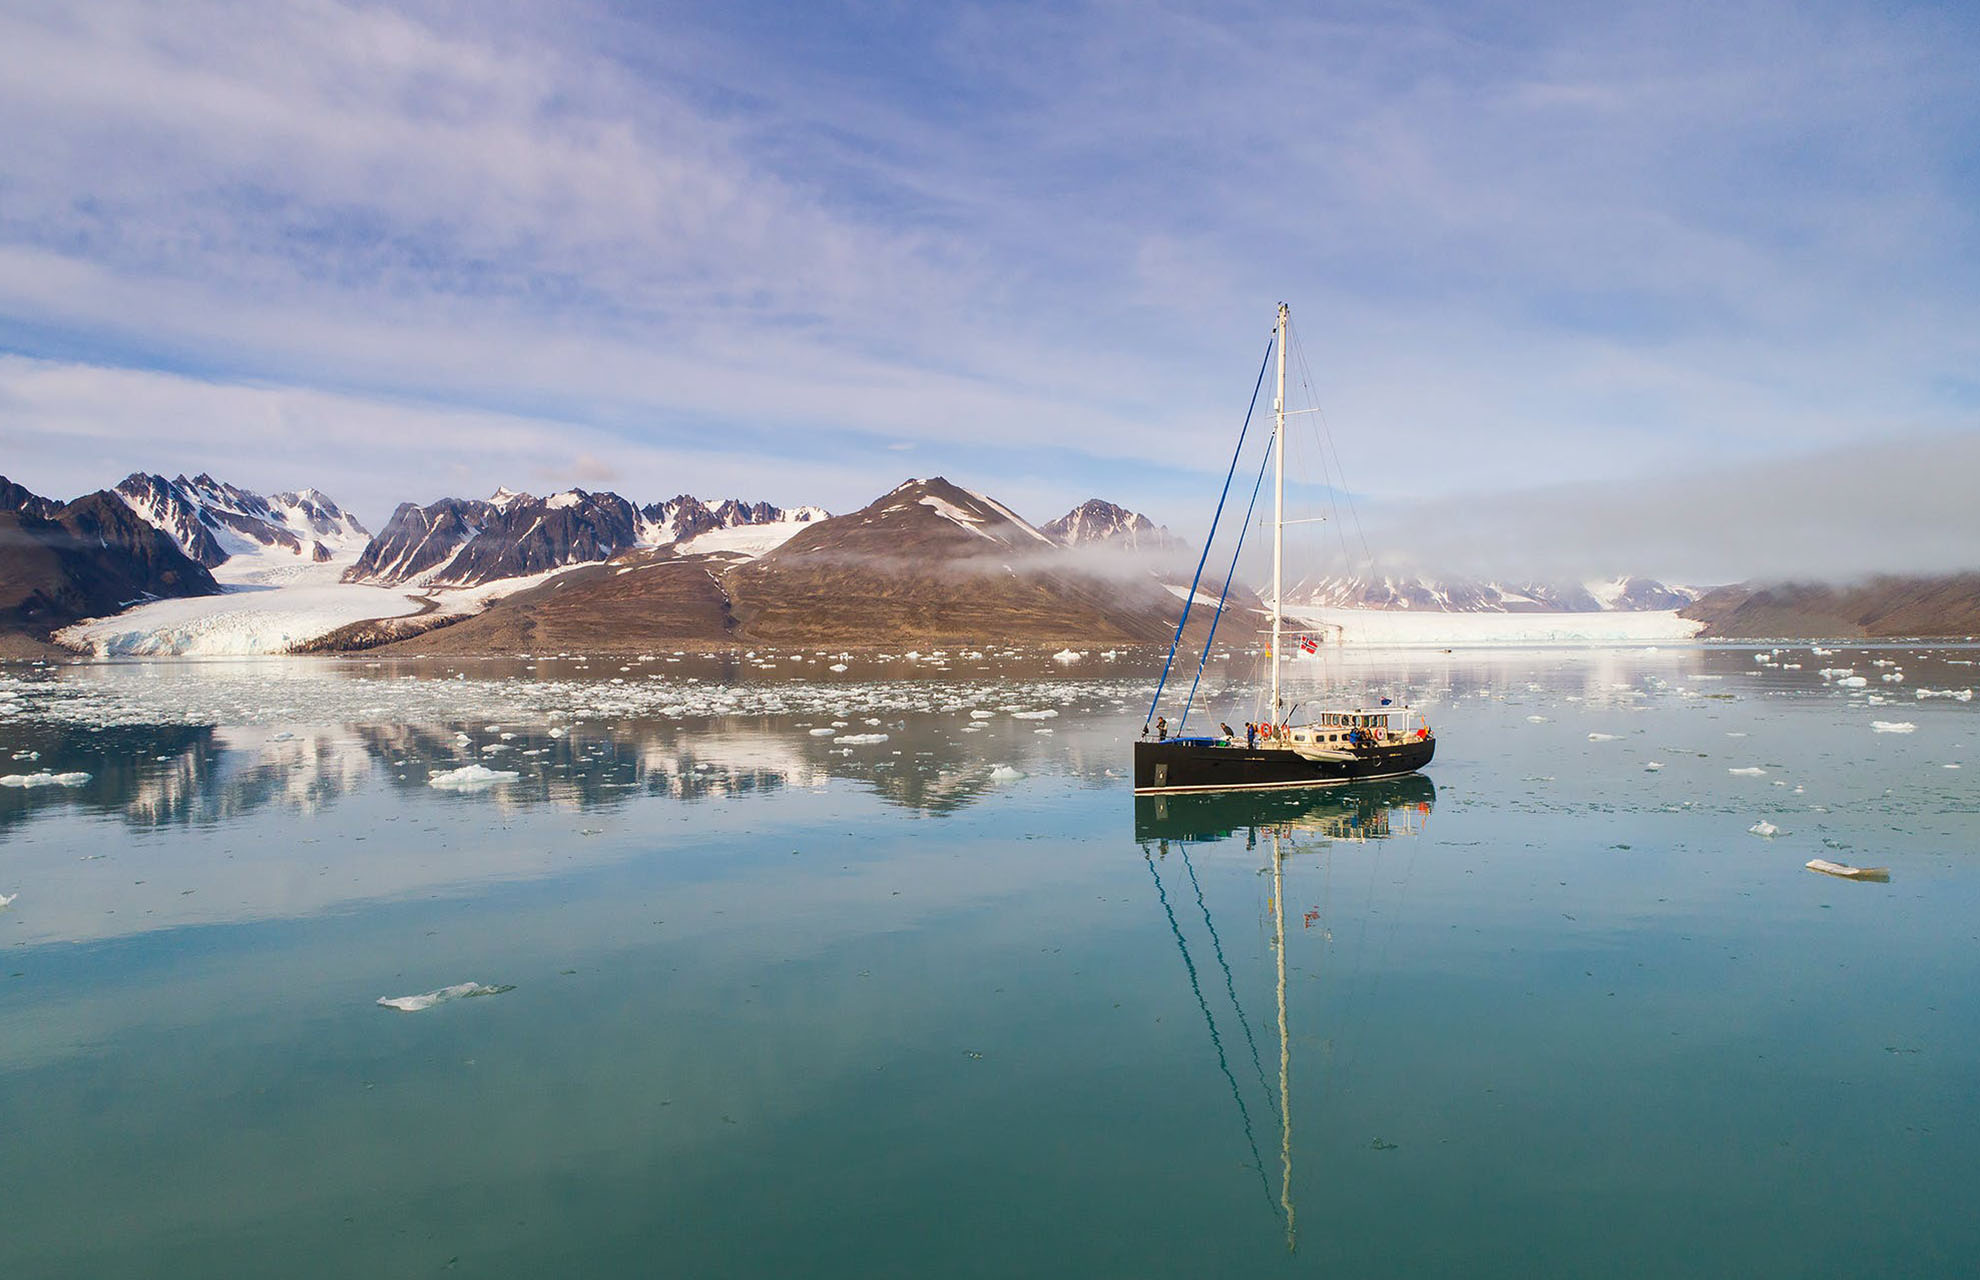 Valiente anchored Svalbard